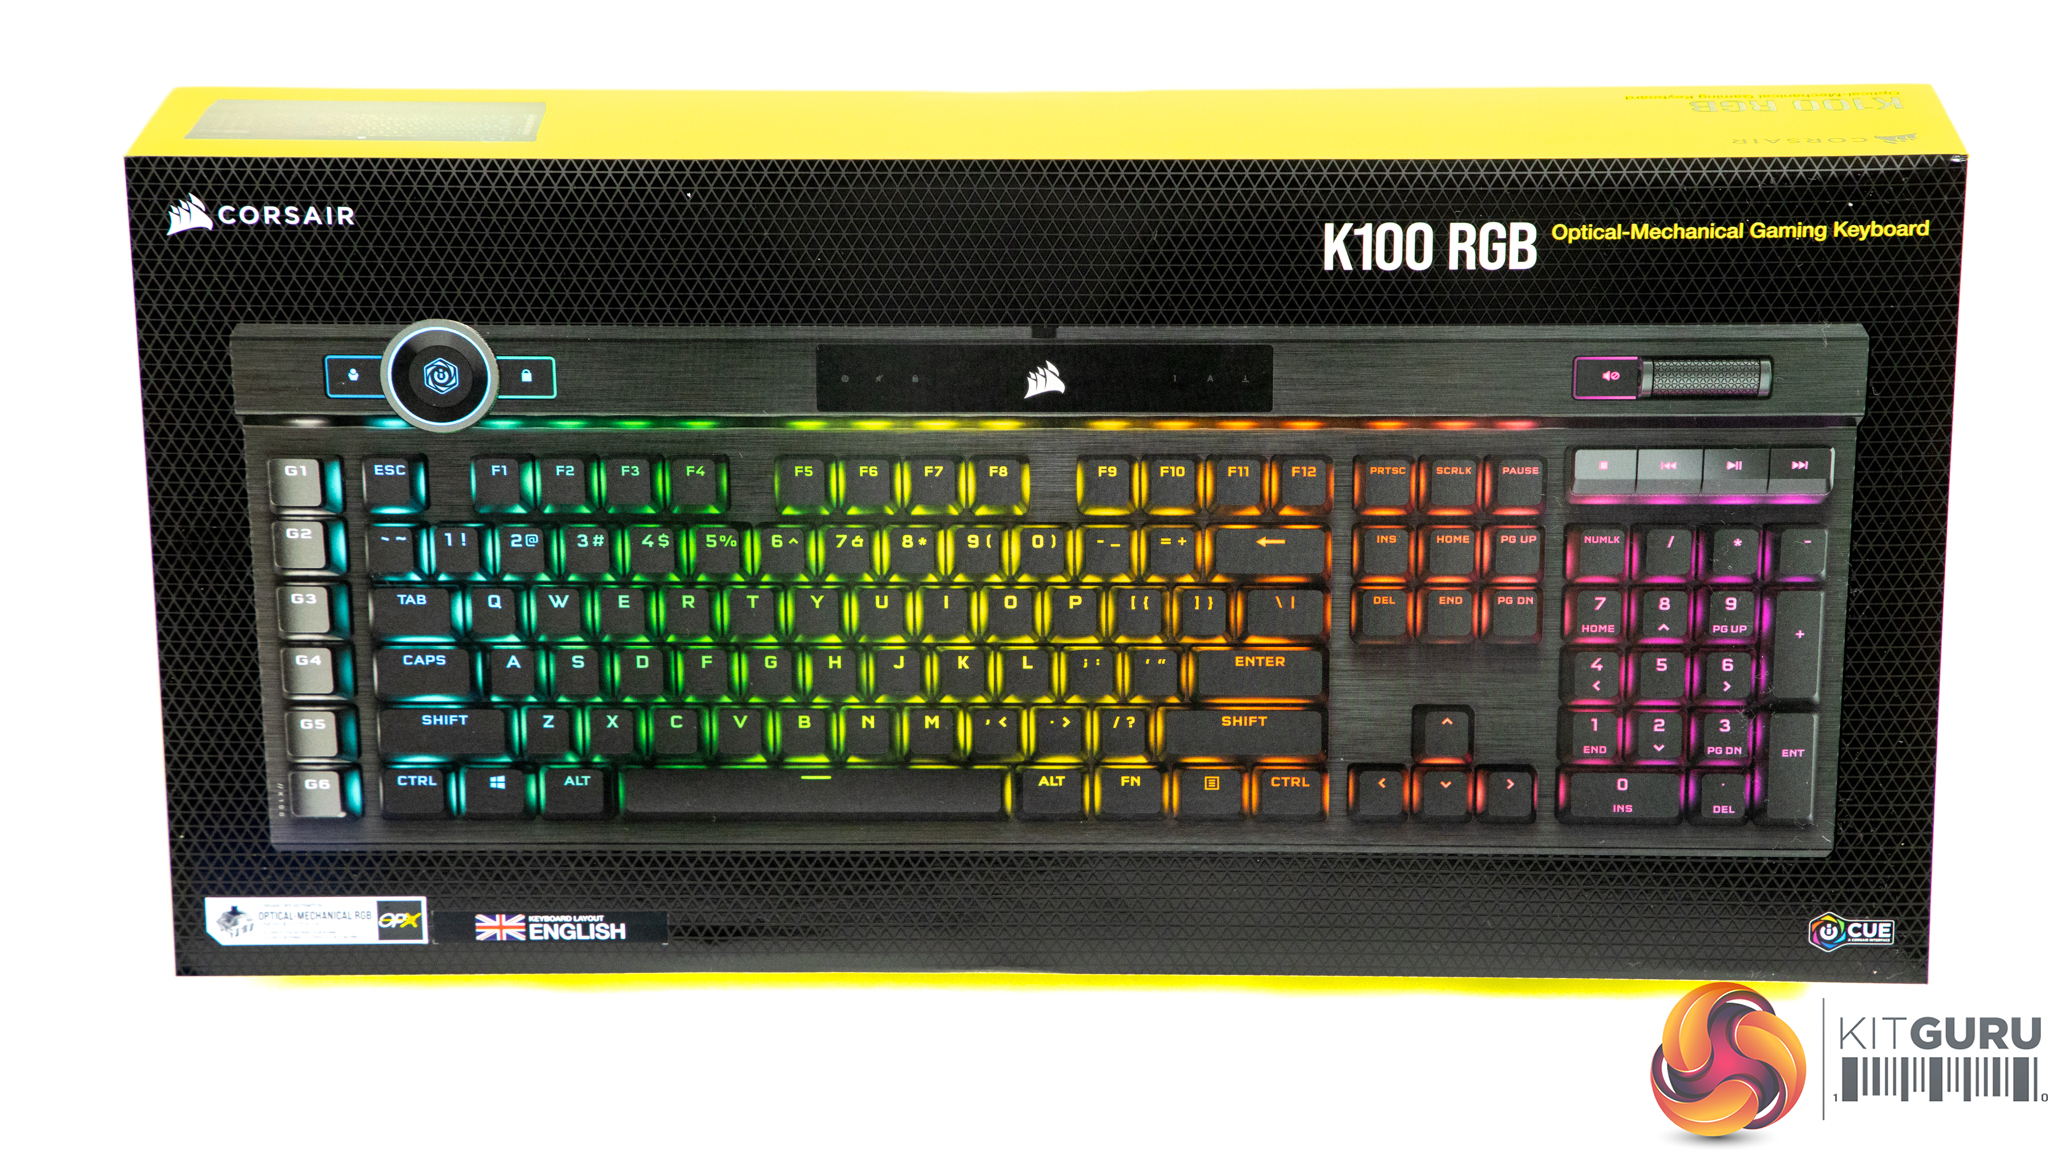 Corsair K100 RGB specifications